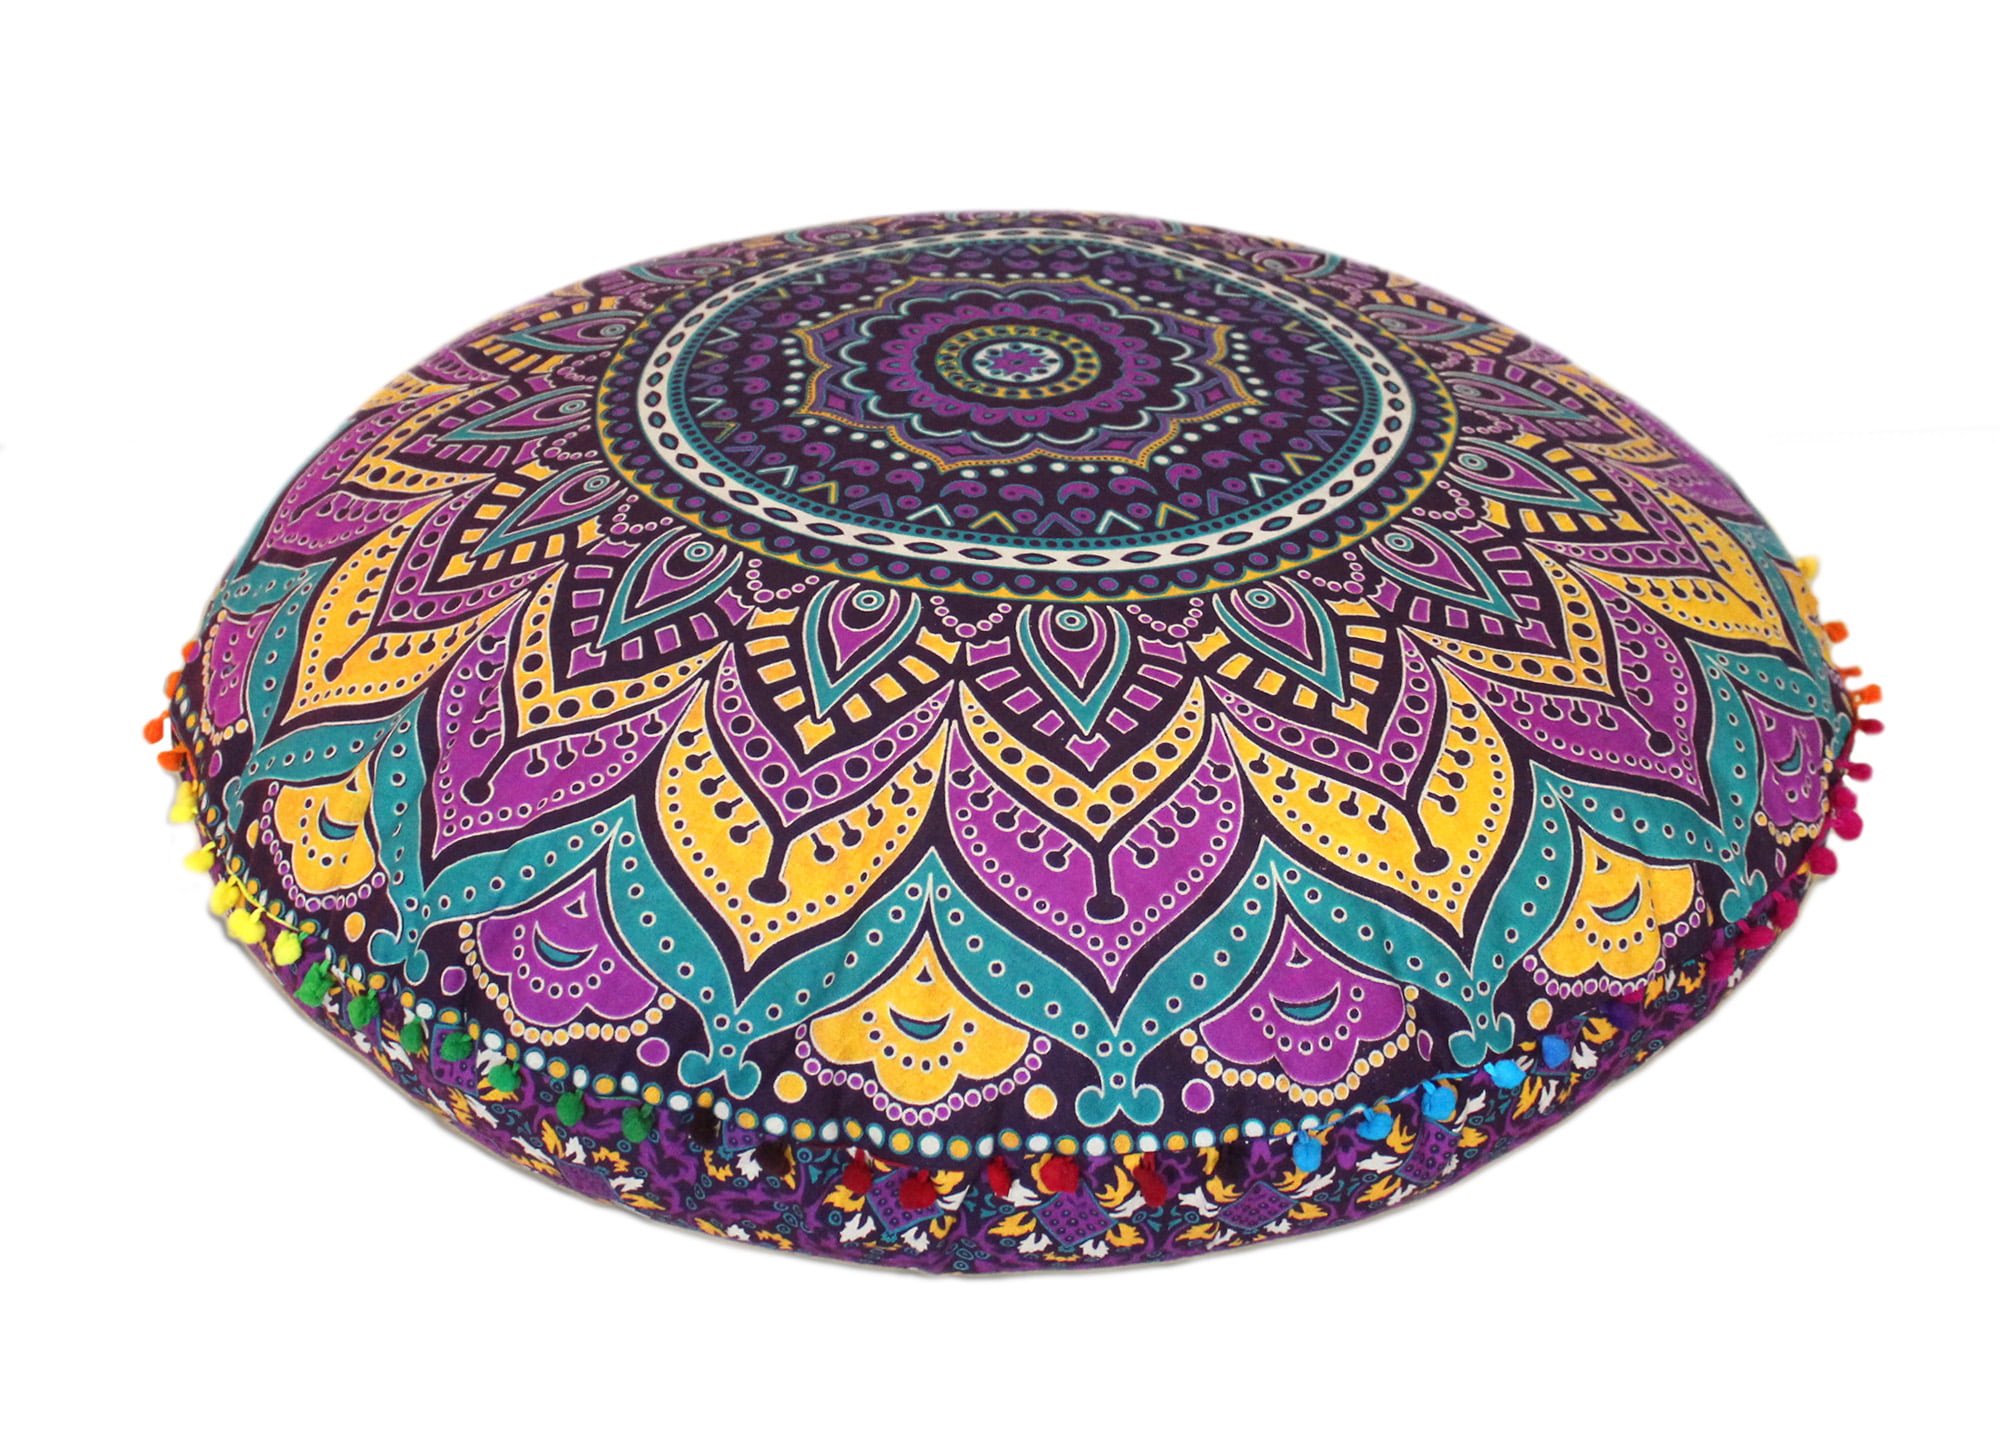 Beautiful Mandala Flower Design Round Floor Cushion Cover 35 Inches Cotton Art